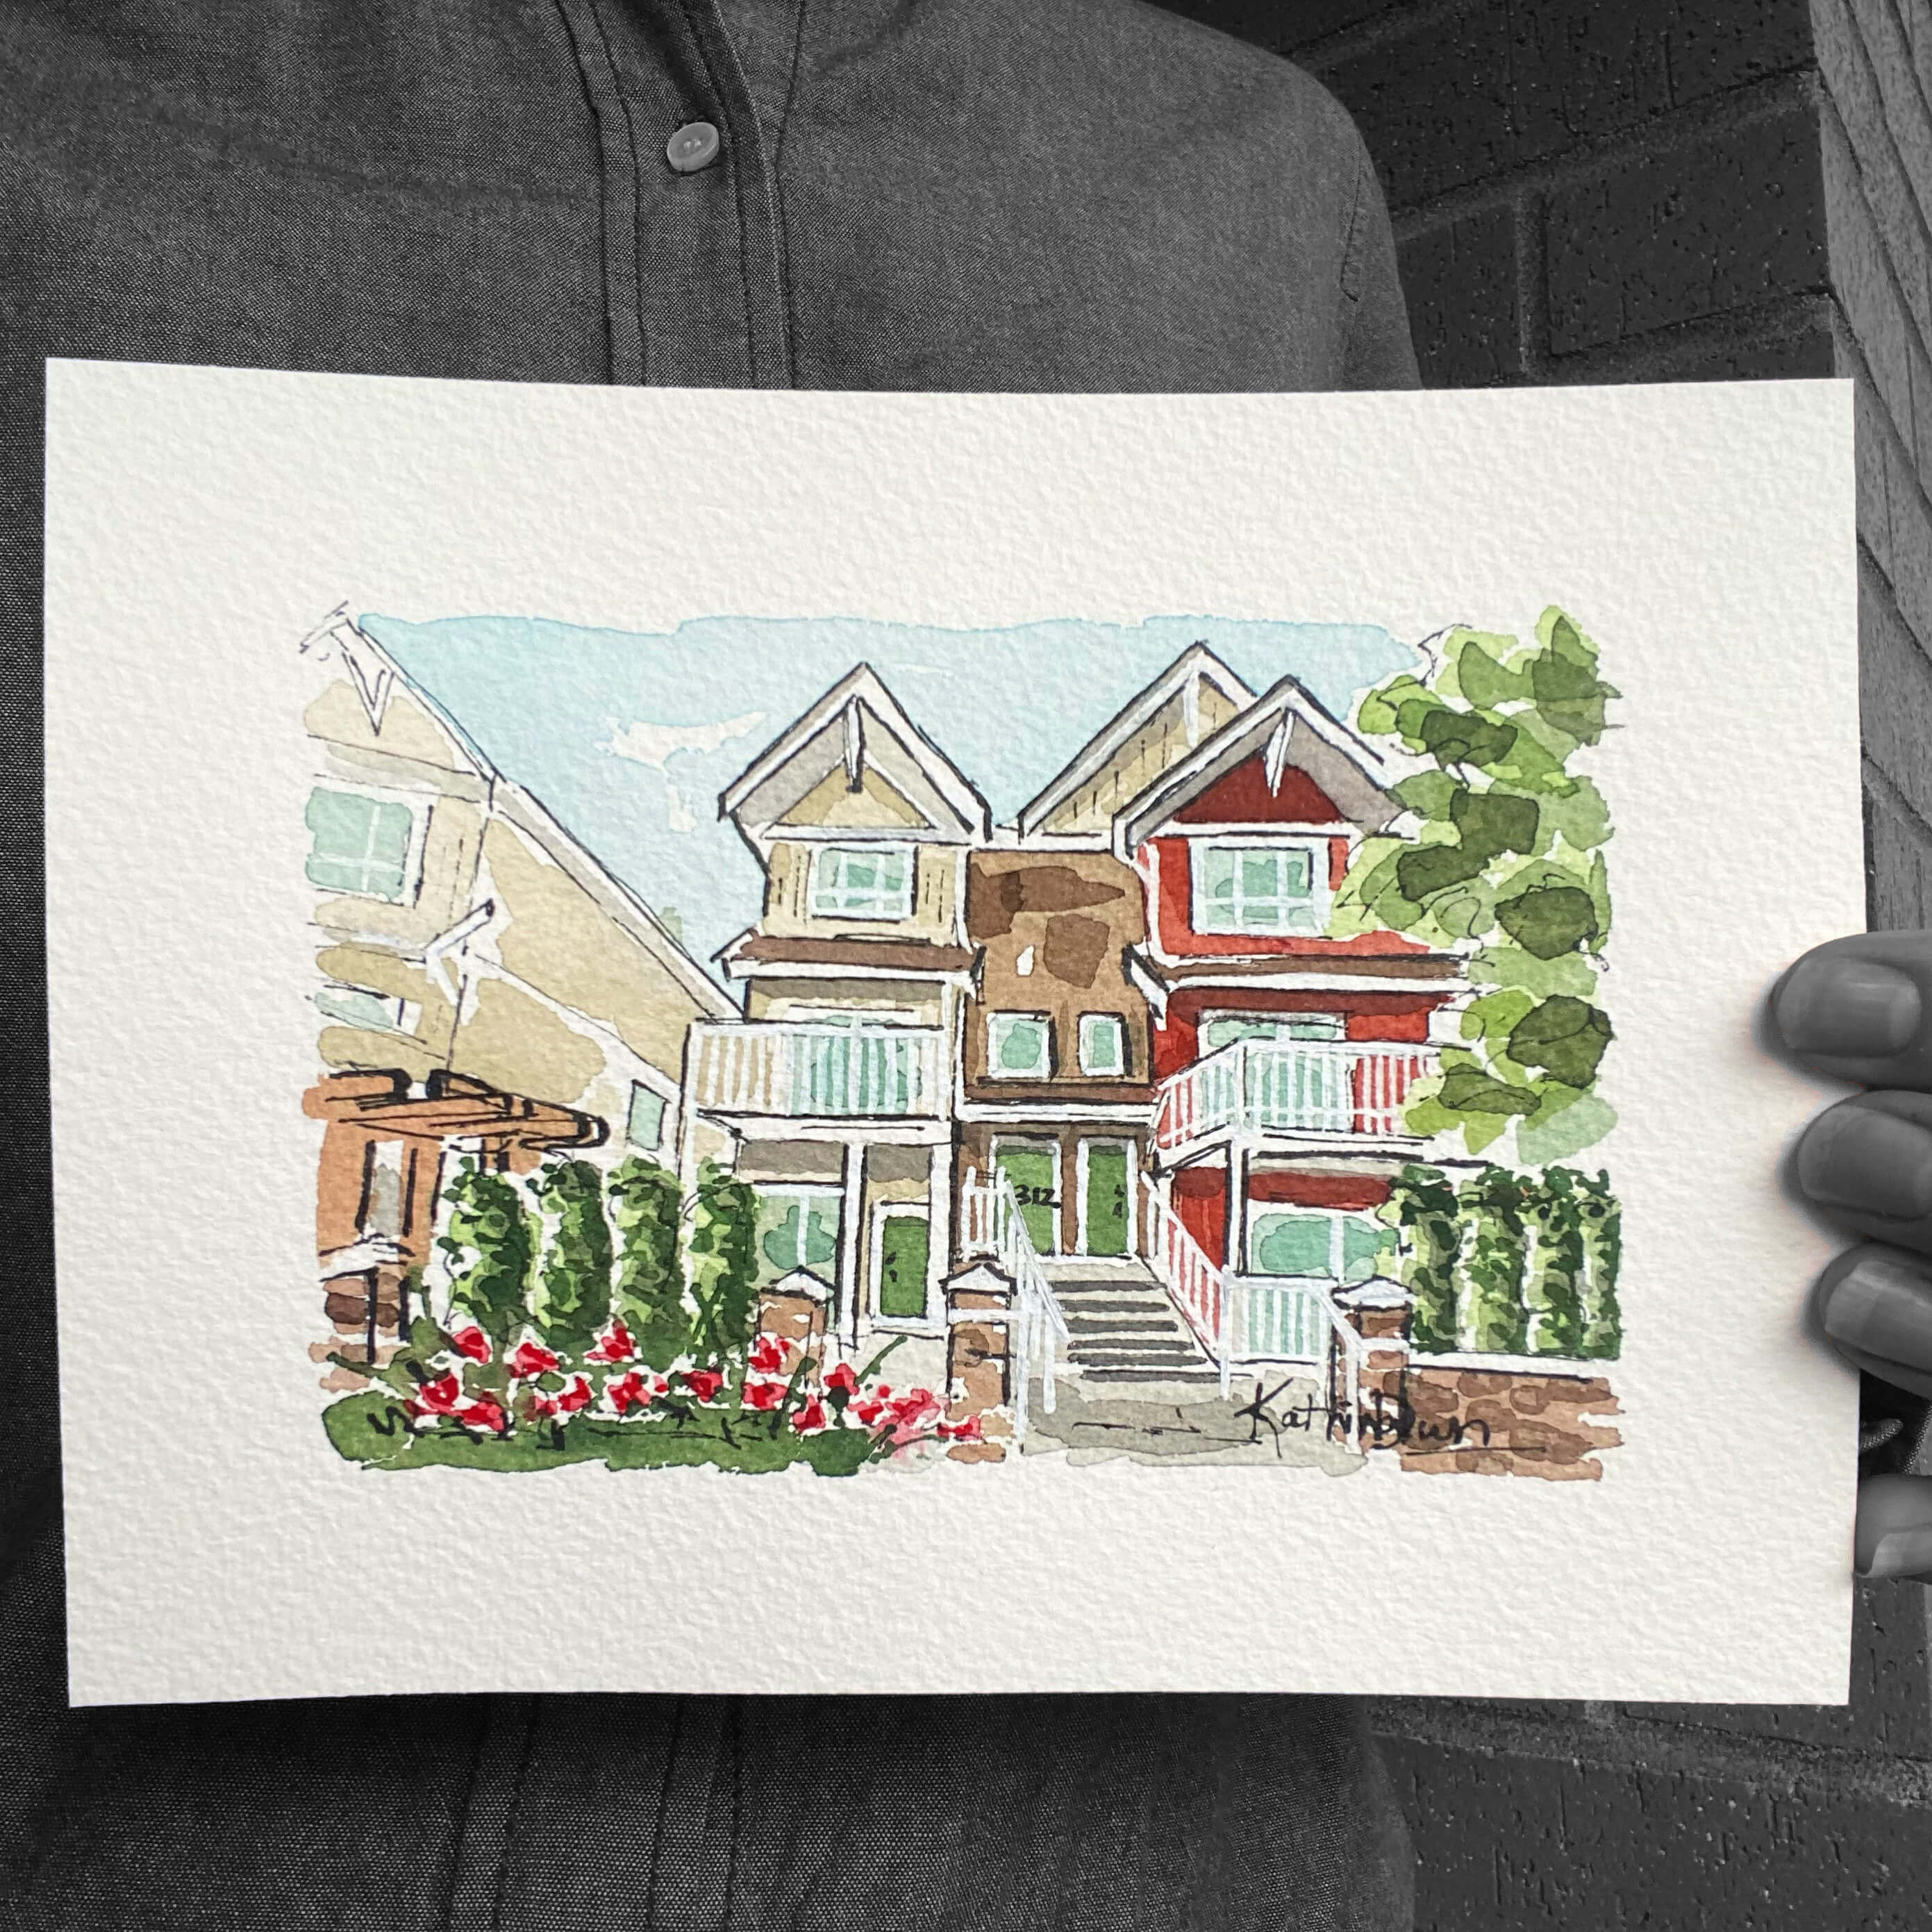 Townhouse Home Portrait by watercolor artist Katrina Dawn